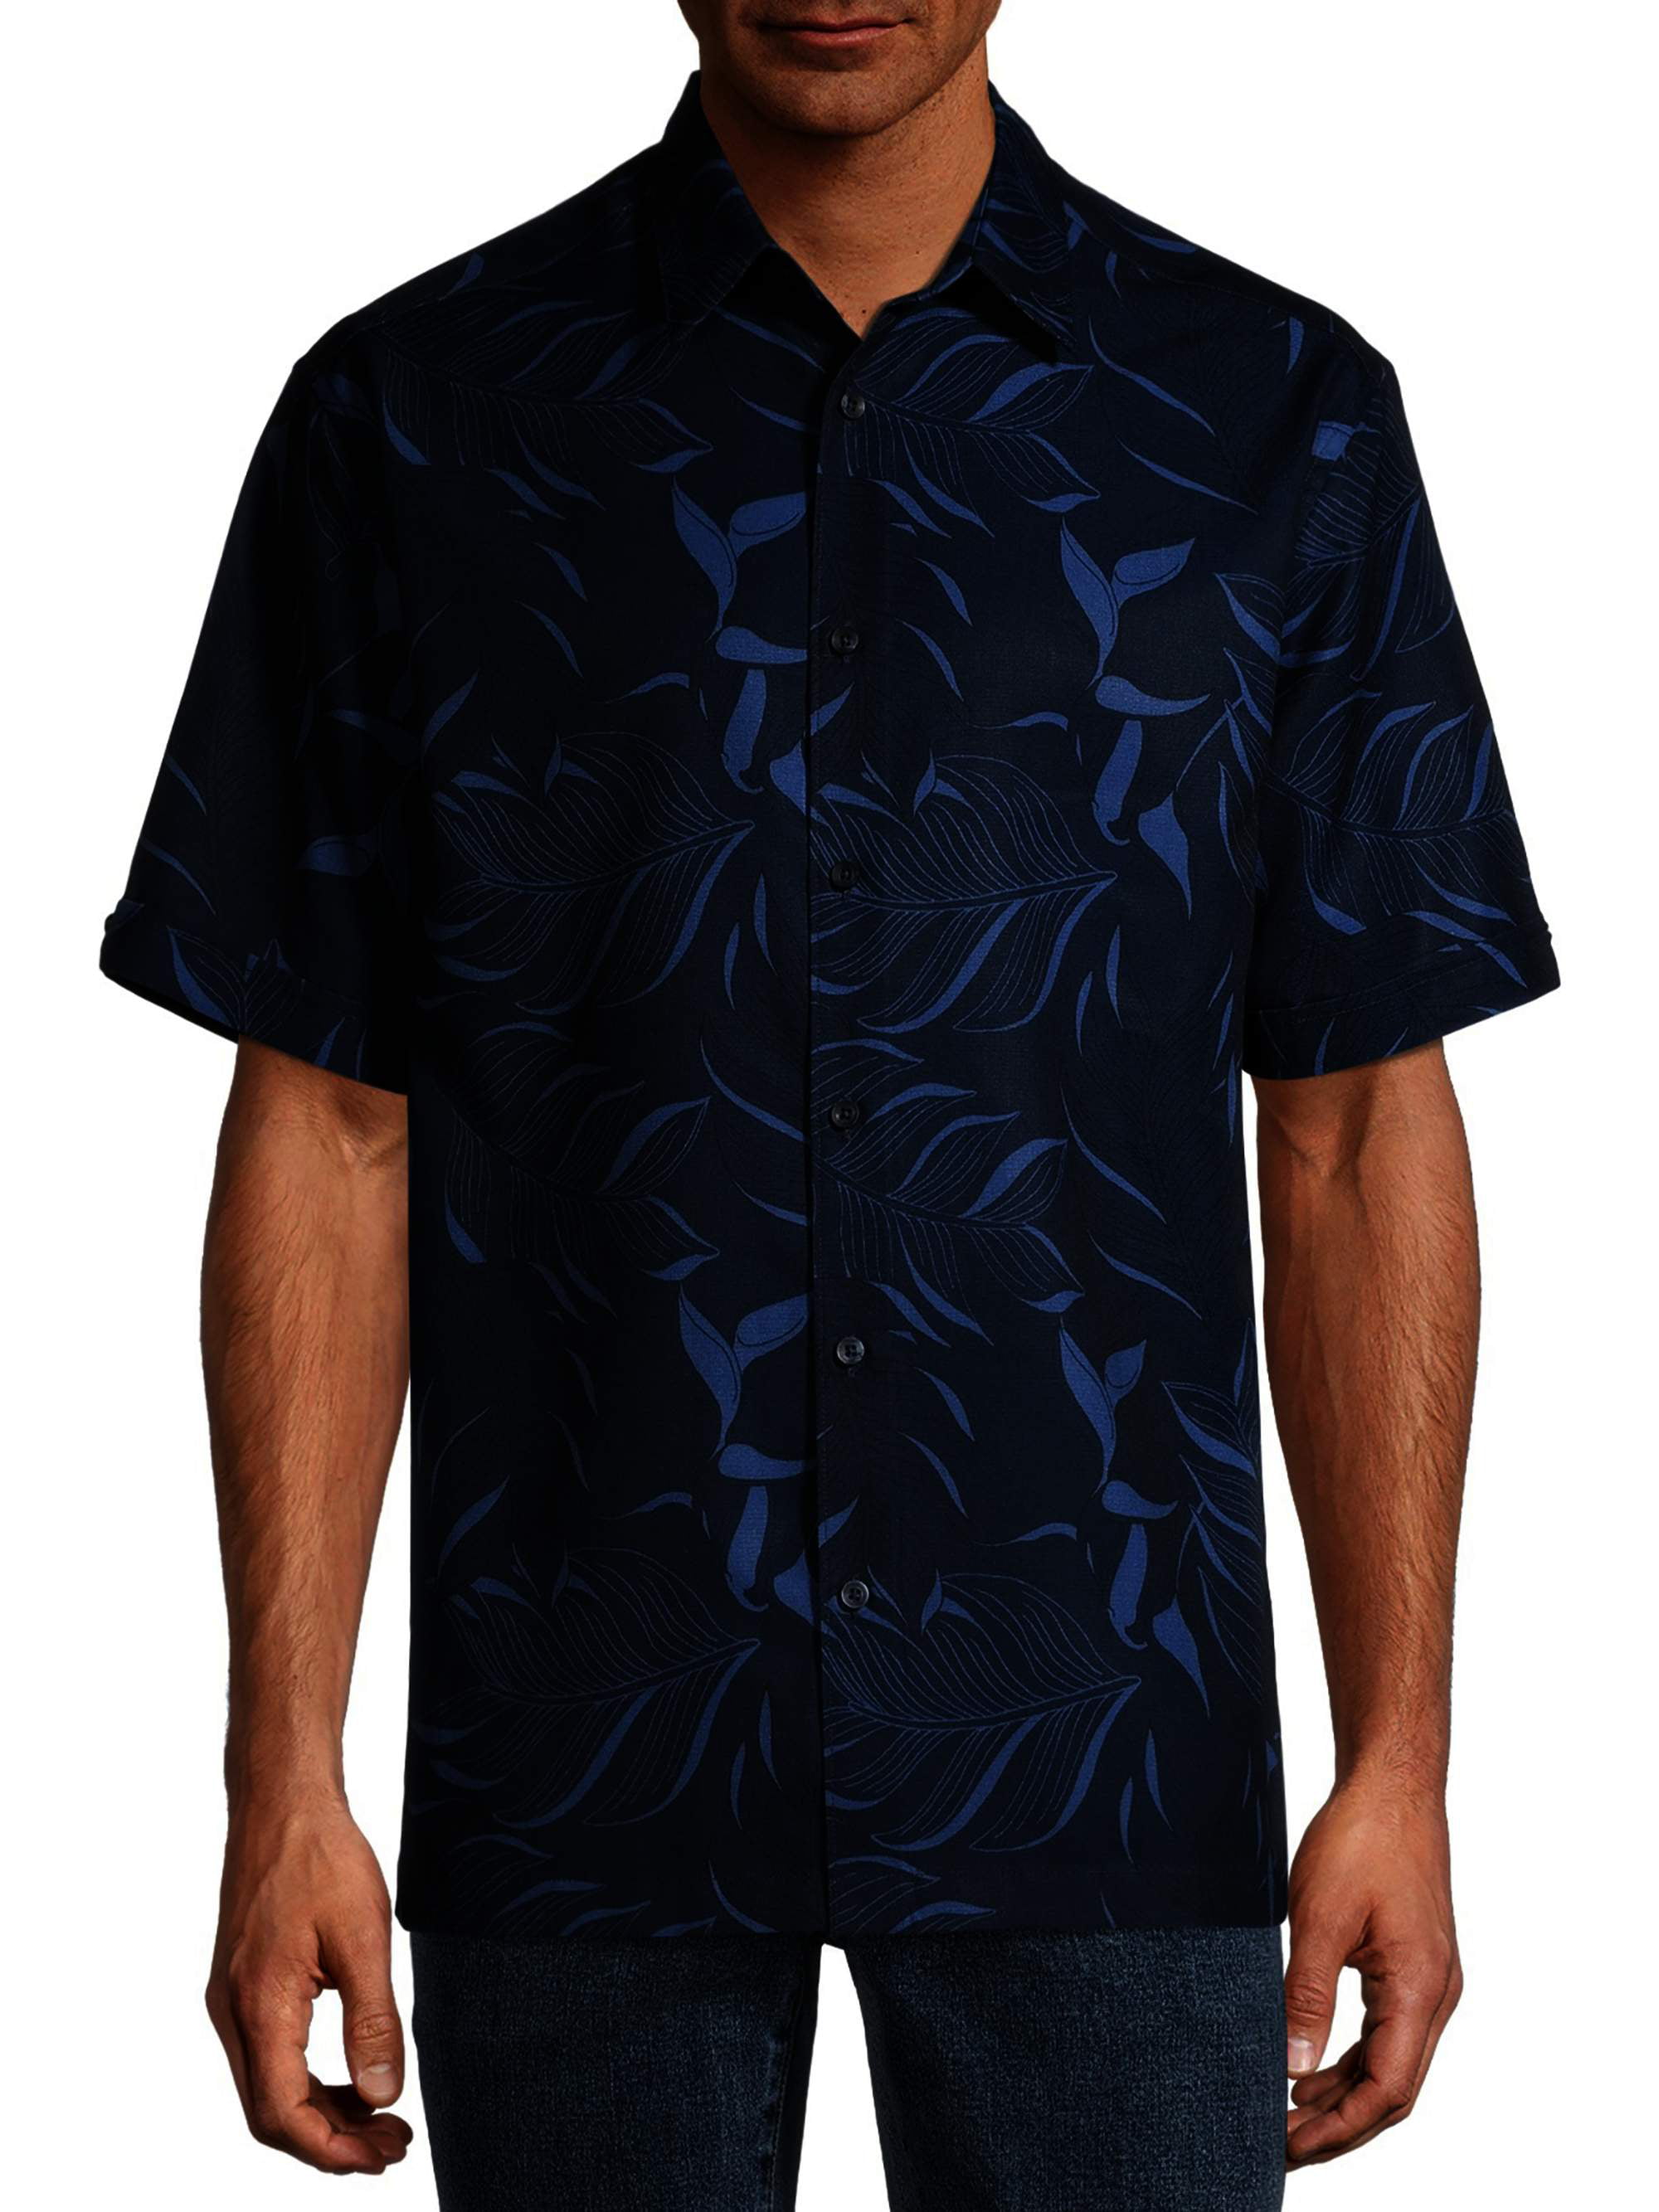 Cafe Luna Men's Short Sleeve Printed Tropical Woven Shirt - Walmart.com